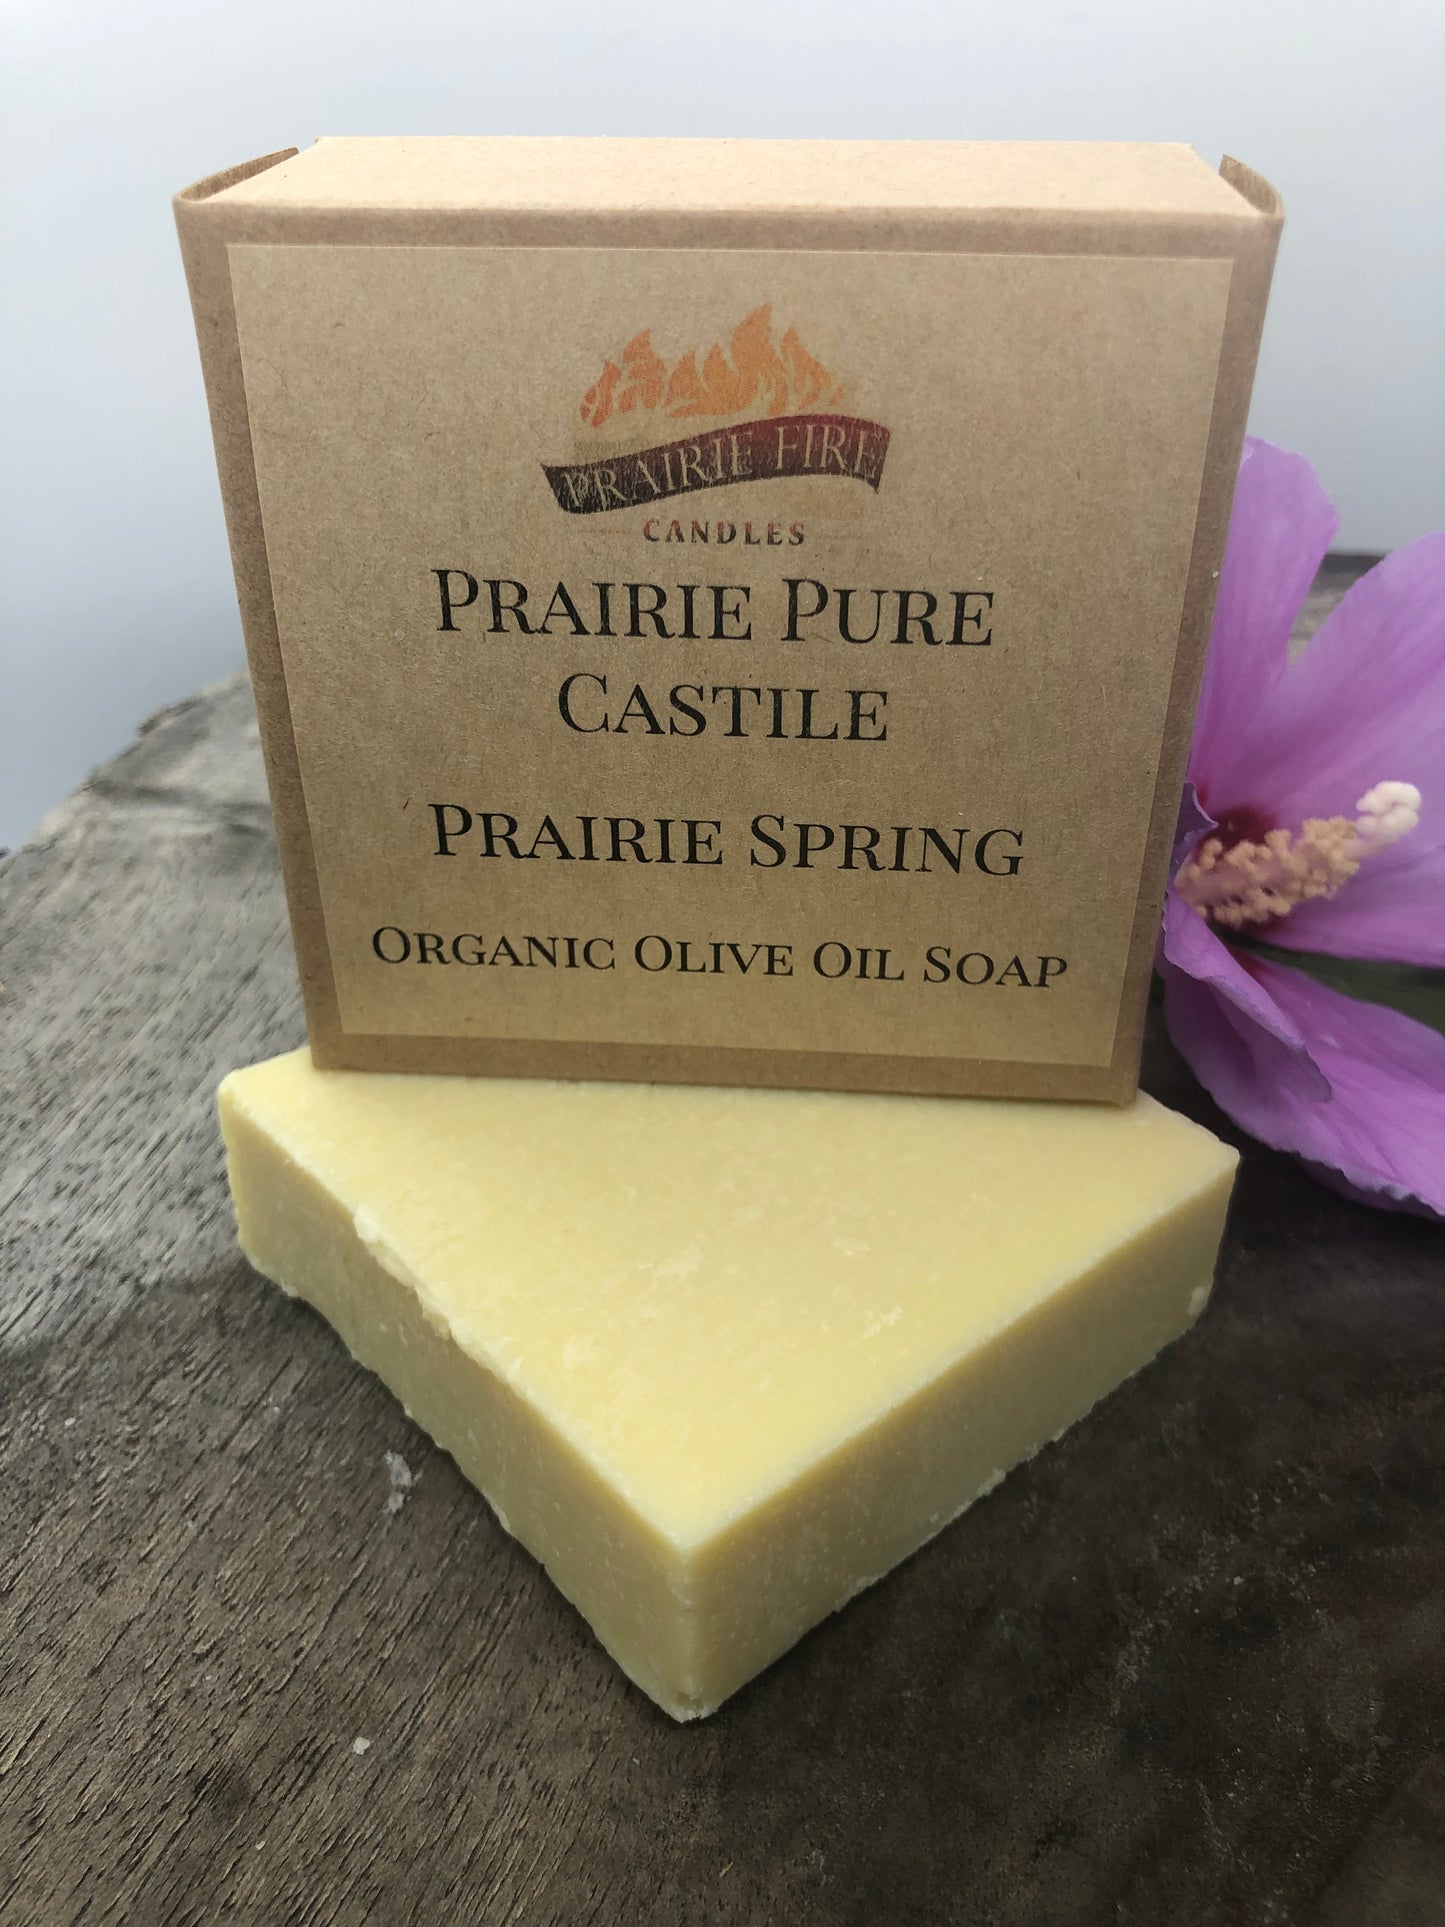 Prairie Spring Real Castile Organic Olive Oil Soap for Sensitive Skin - Dye Free - 100% Certified Organic Extra Virgin Olive Oil